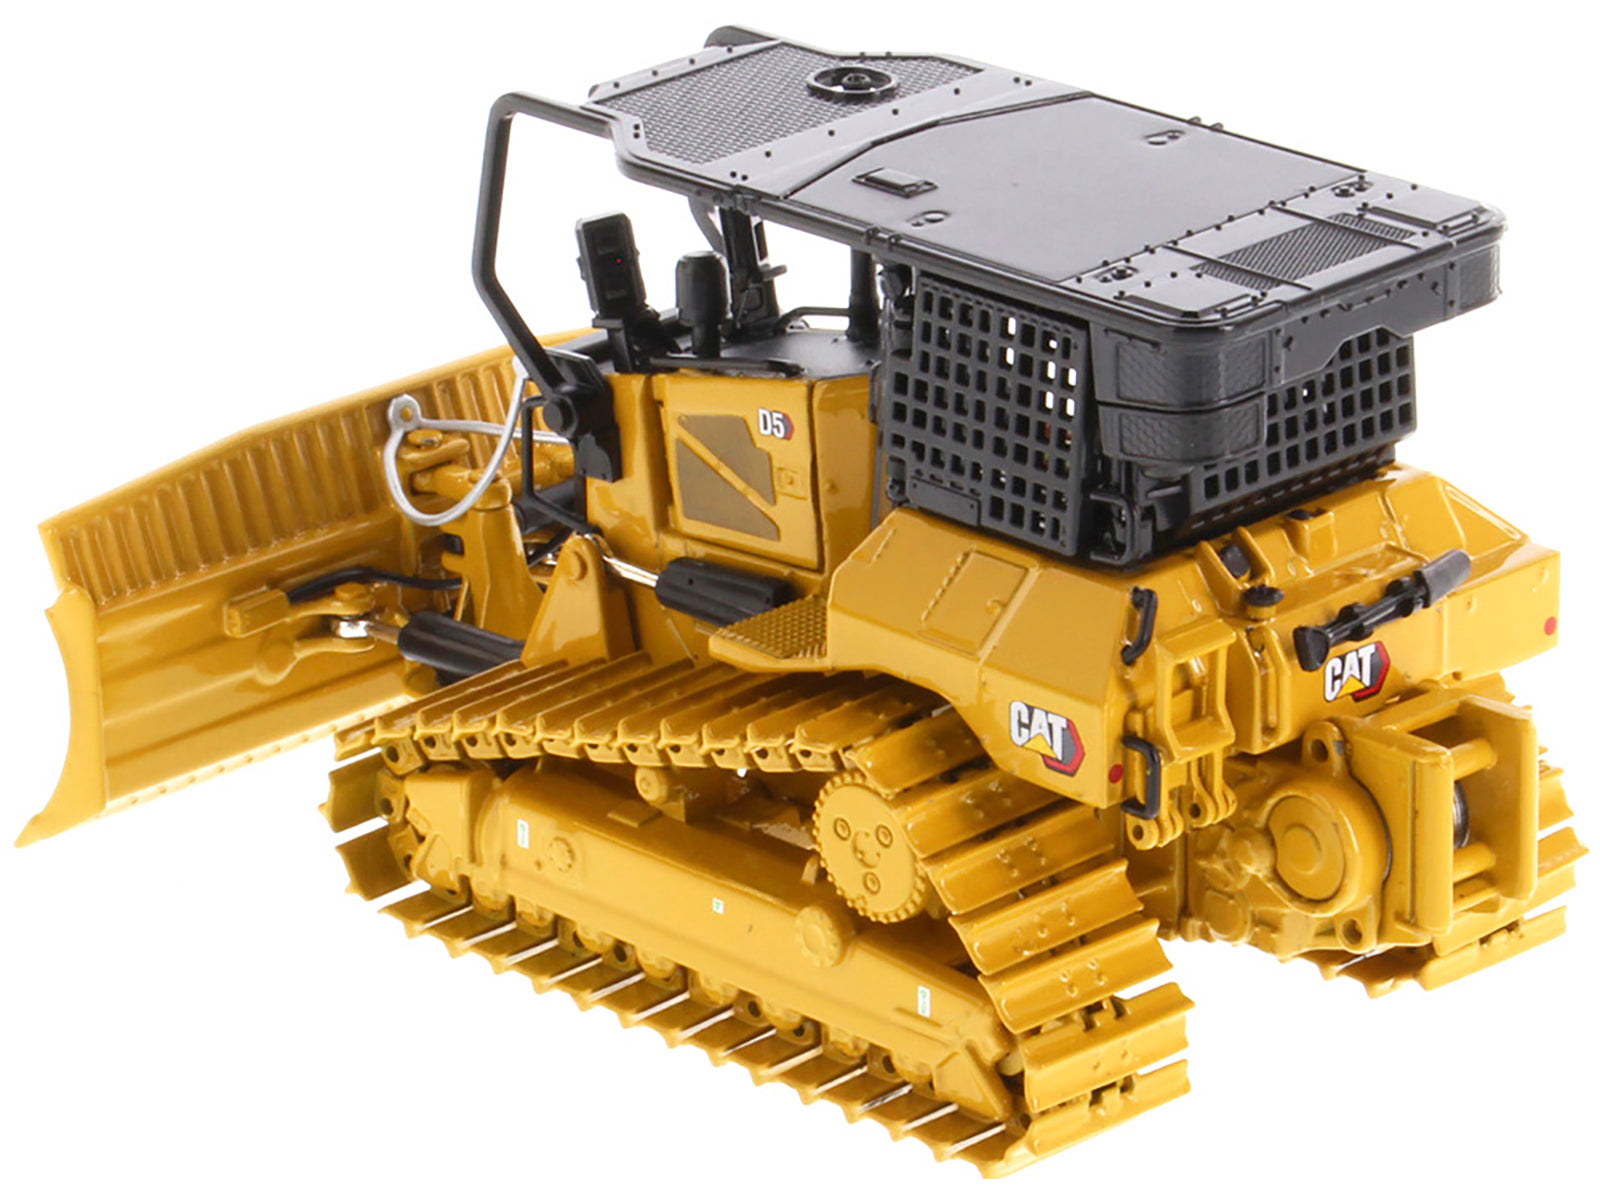 cat d5 lgp tractor dozer 1/50 diecast model